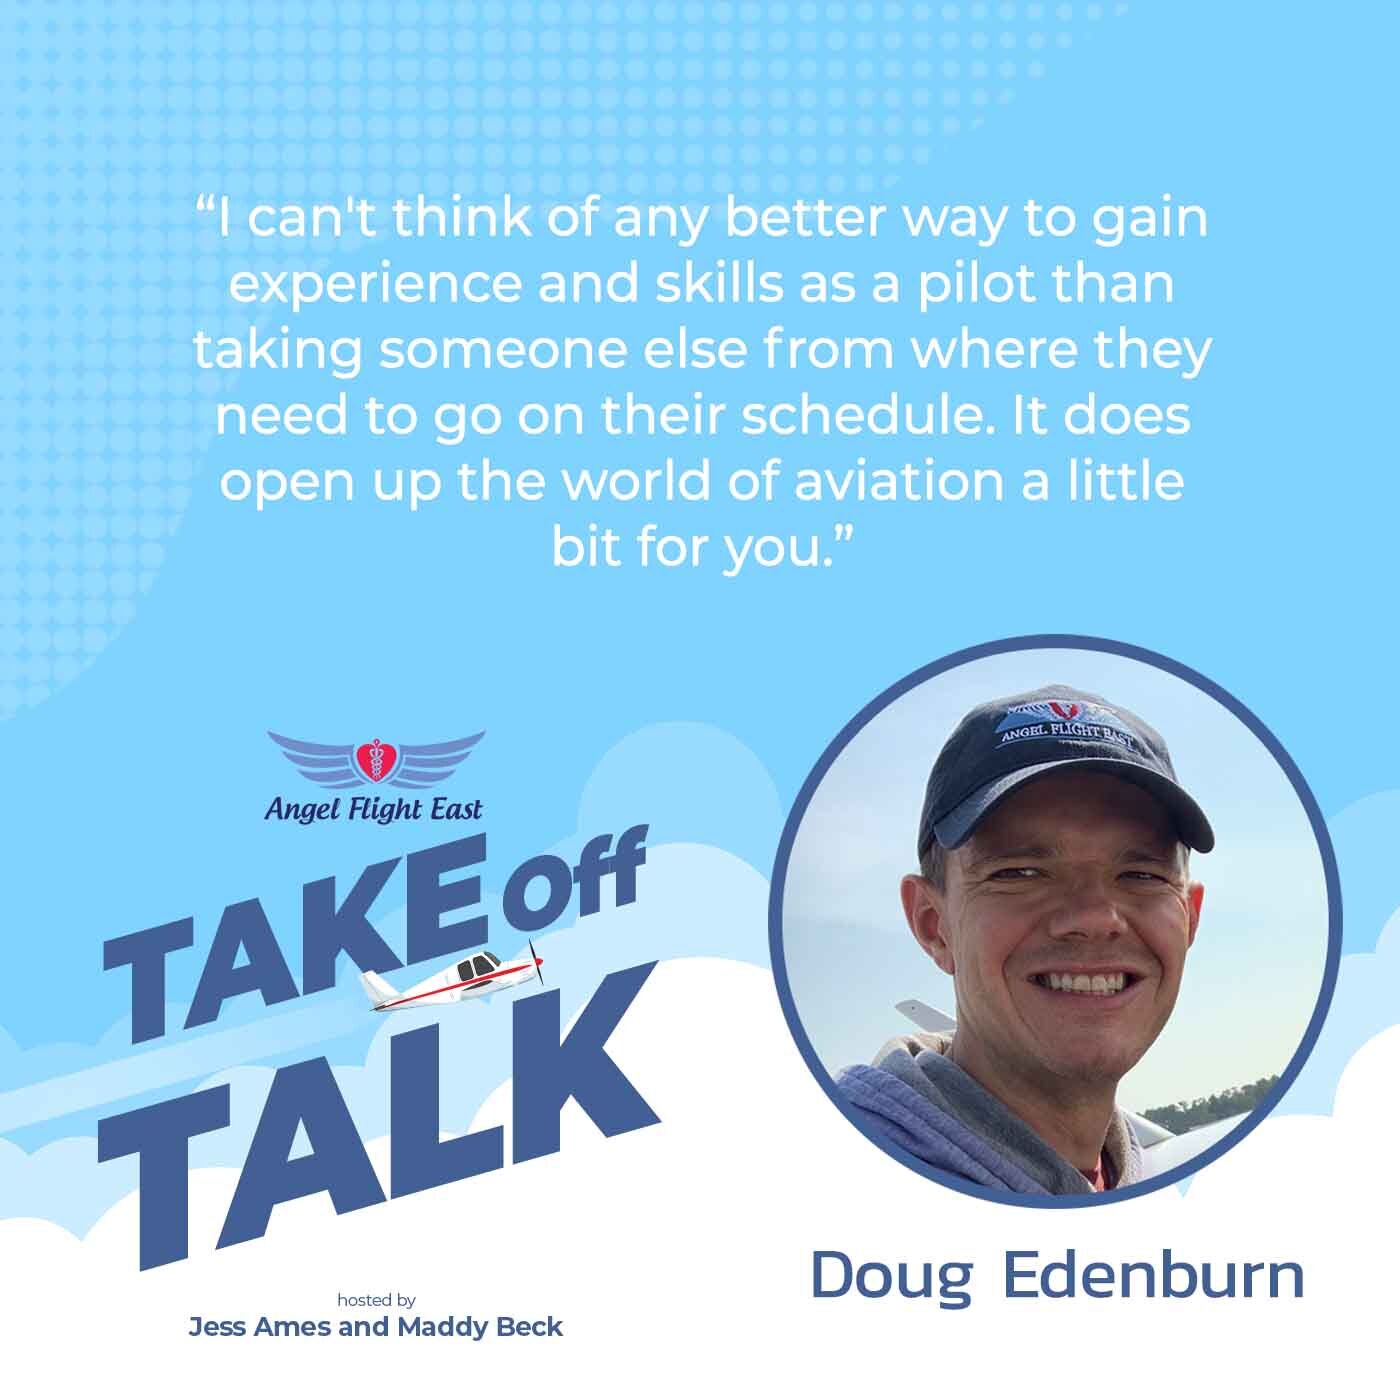 Take Off Talk with Angel Flight East | Doug Edenburn | Volunteer Pilot